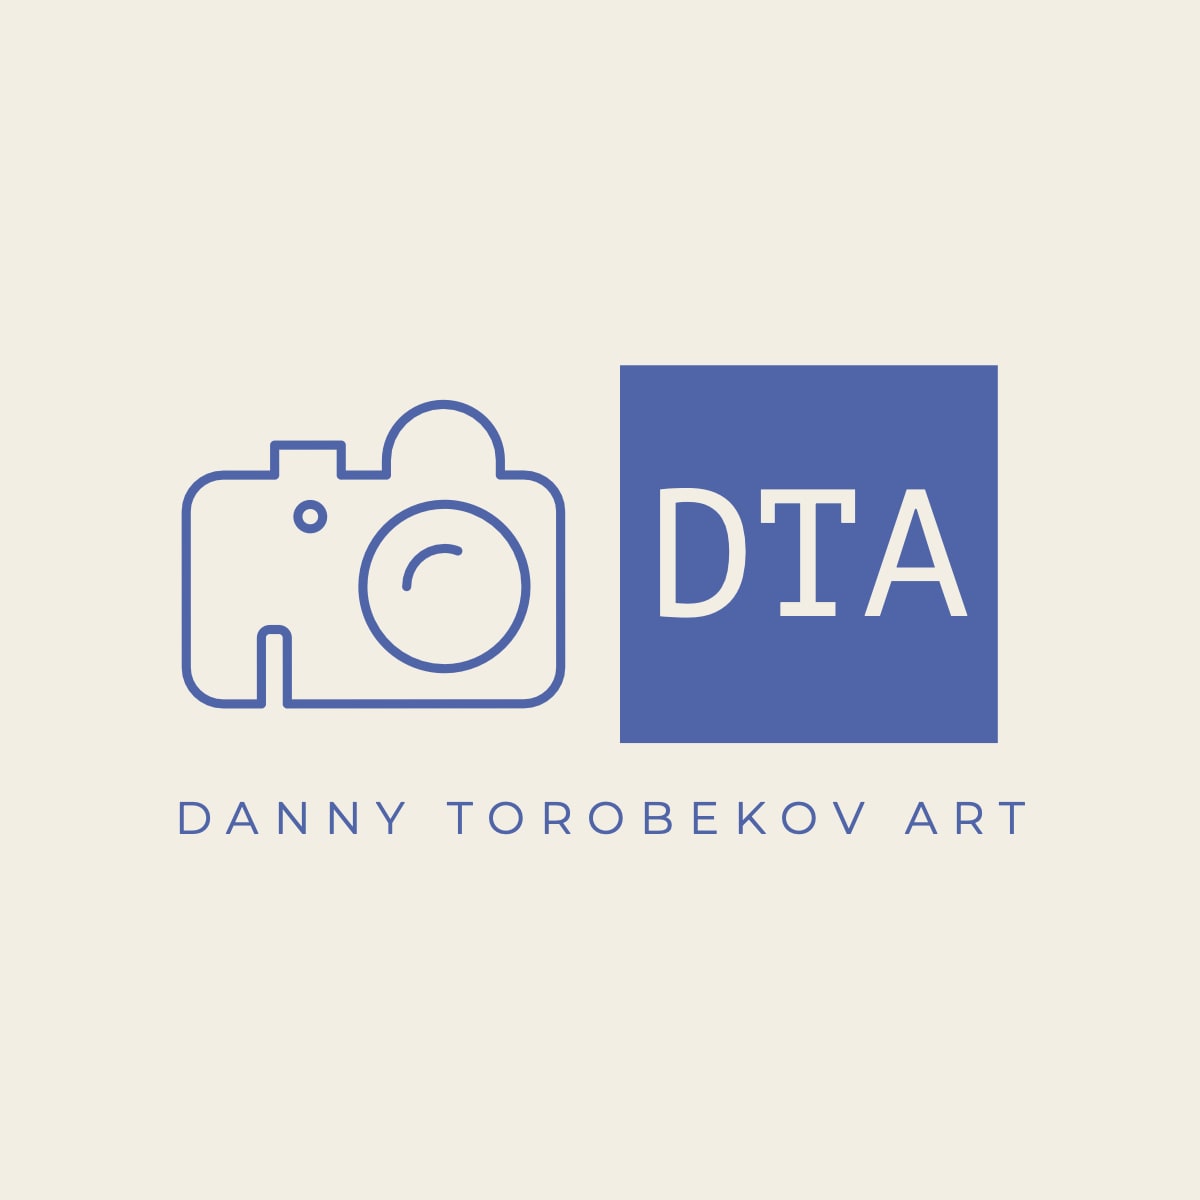 Danny Torobekov Art